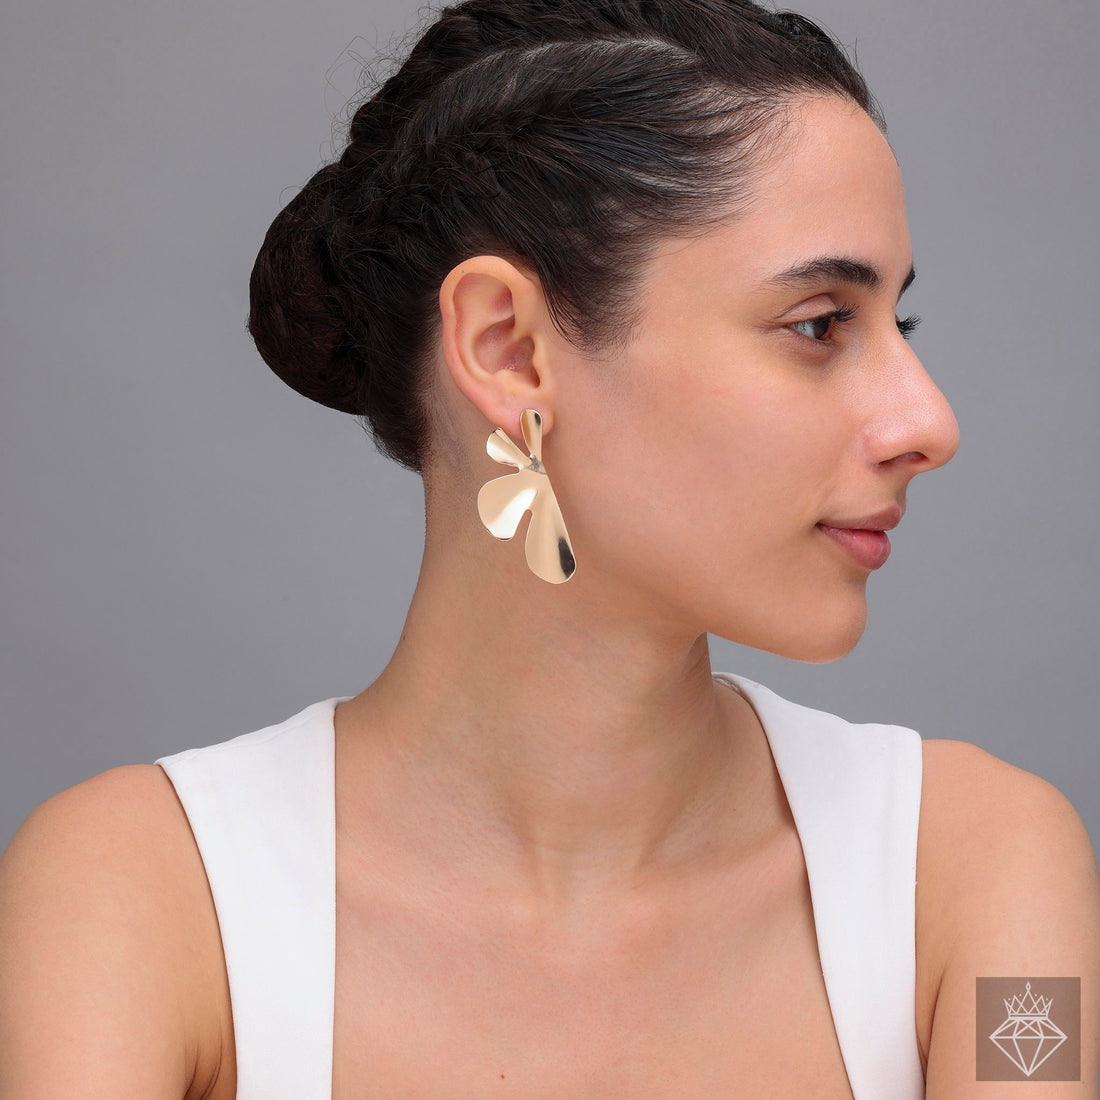 Lush Luxury: PRAO's Palm Leaf Earrings